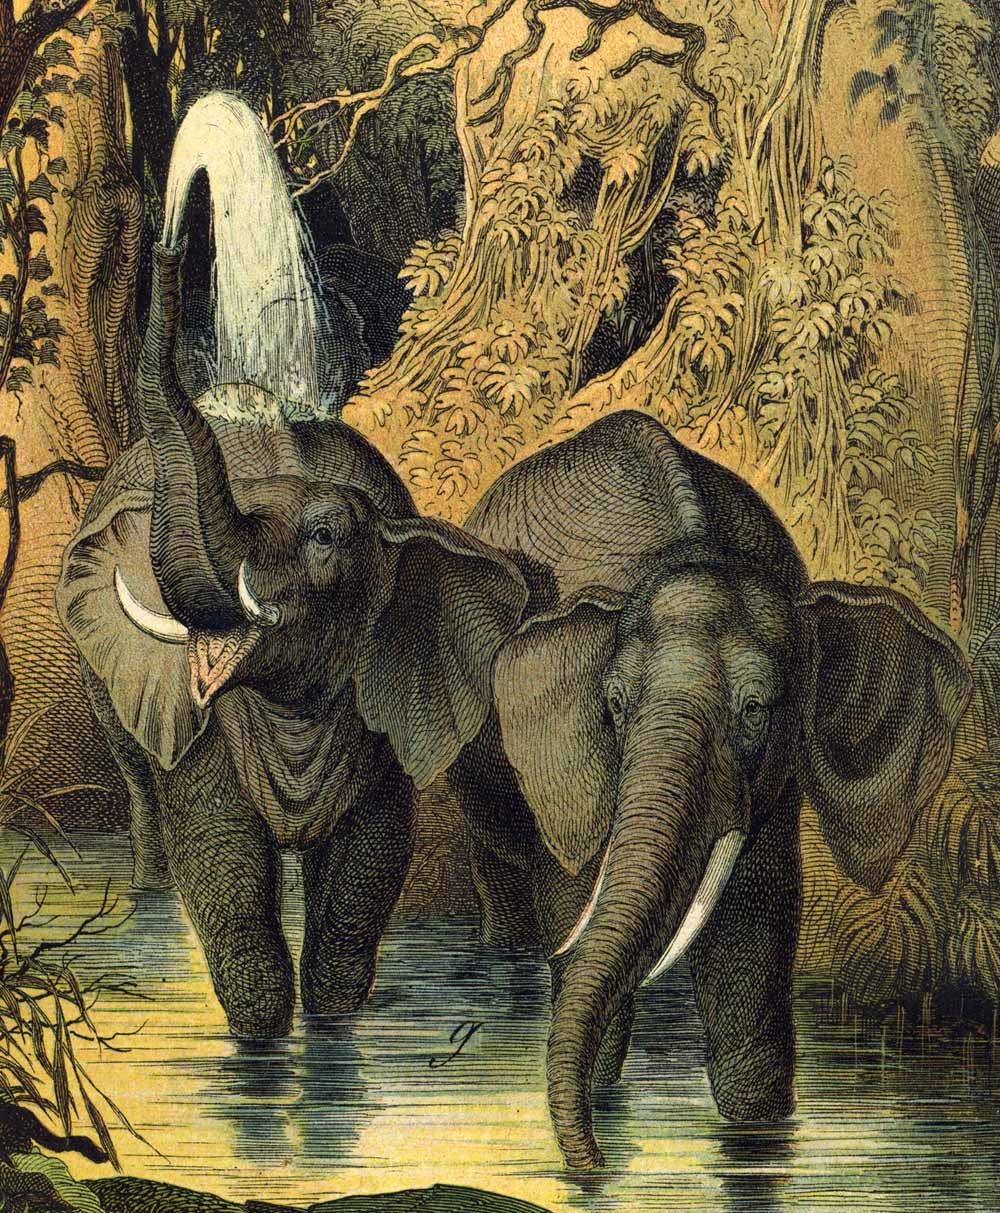 SUDAN, ELEPHANTS OF AFRICA engraving print illustration from 1880 